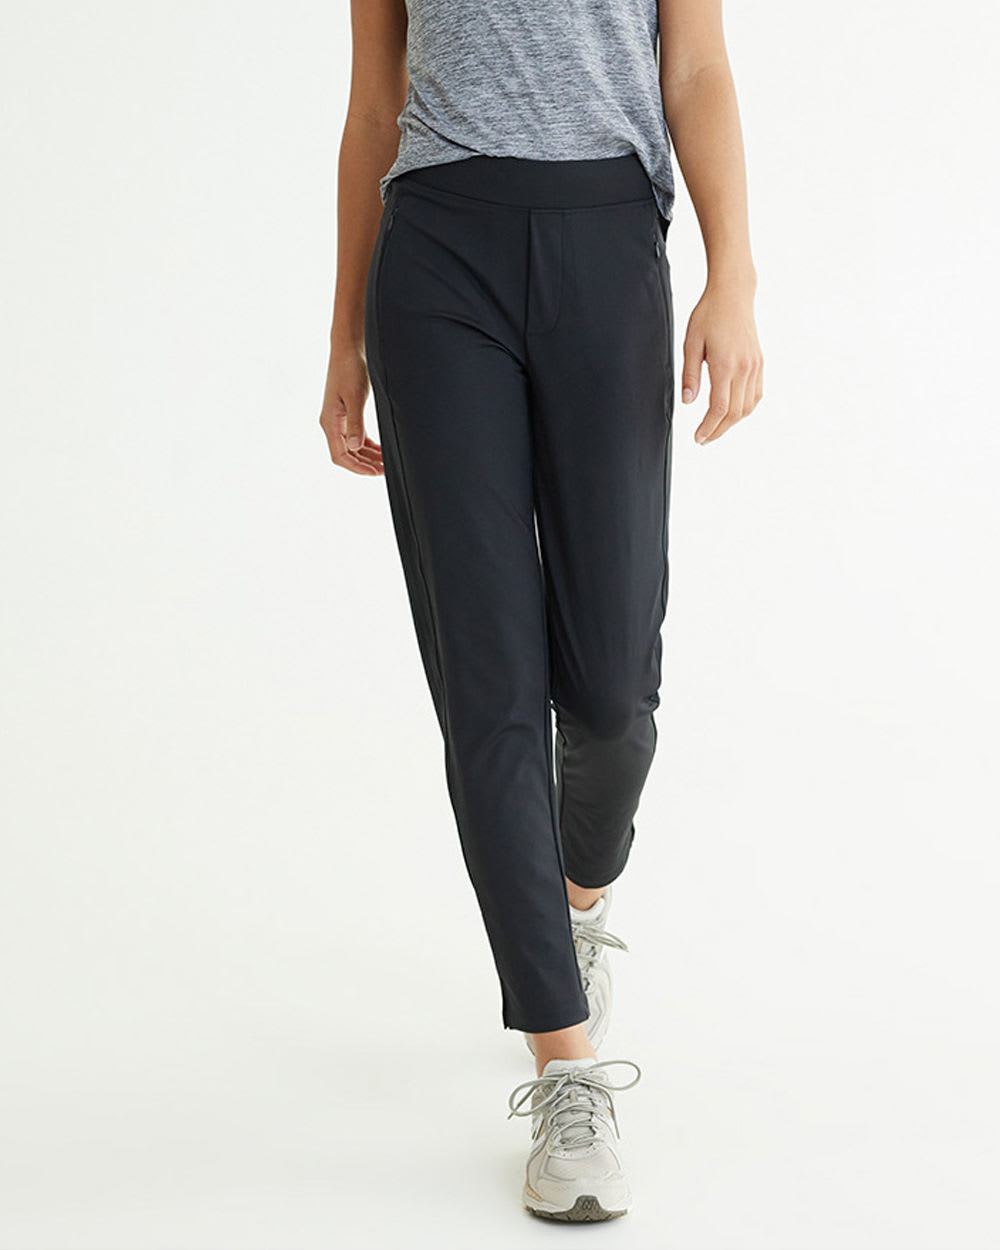  Side Pockets,Tall Womens Straight Leg Yoga Pants Slim Fit Workout  Pants,35,Black,XXL